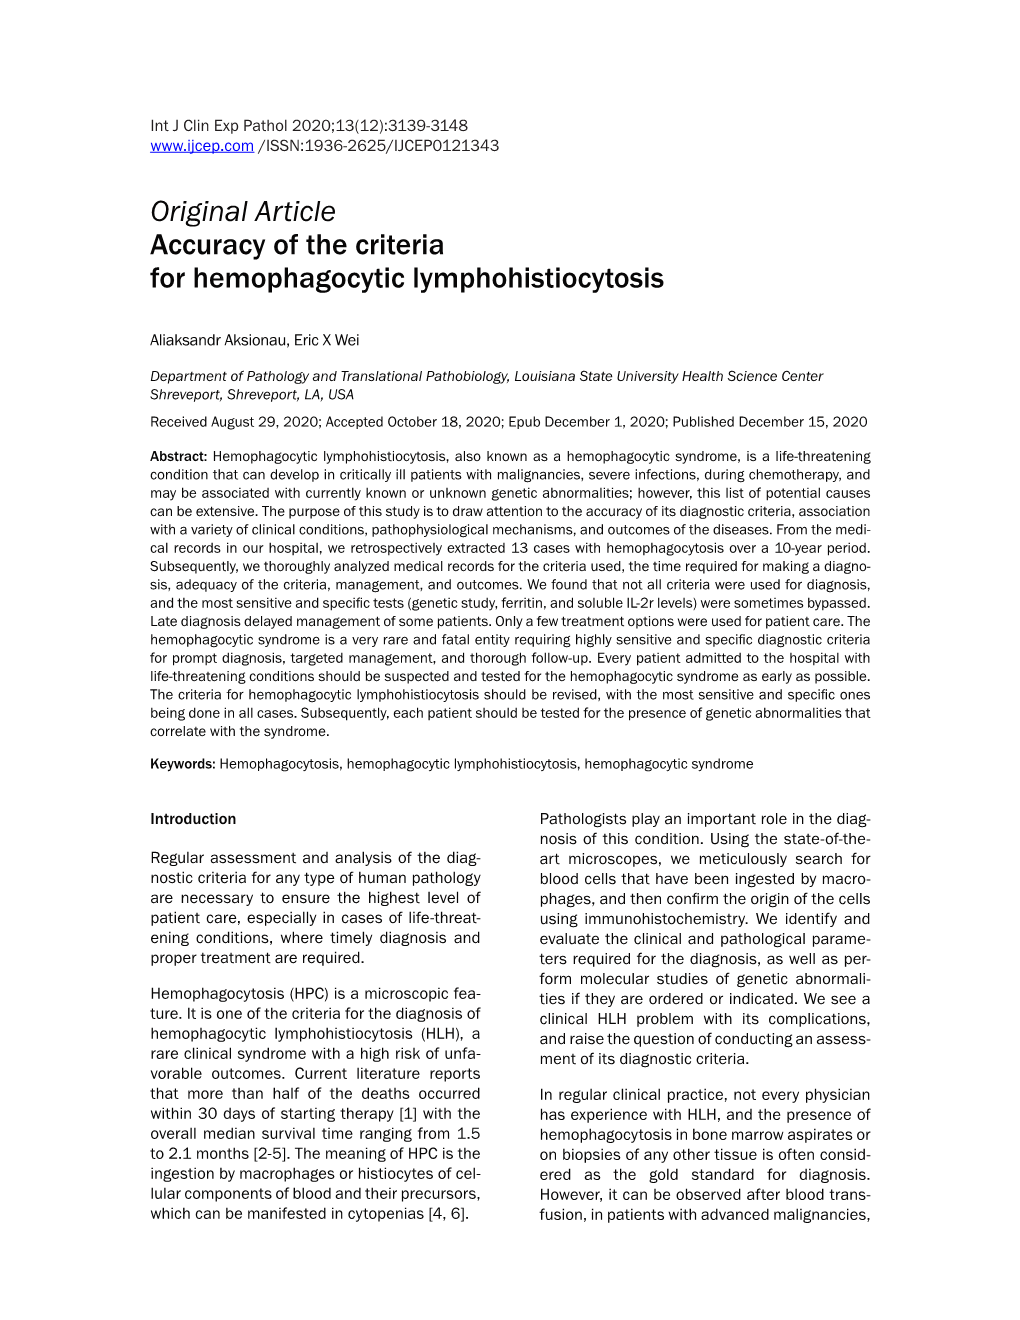 Original Article Accuracy of the Criteria for Hemophagocytic Lymphohistiocytosis